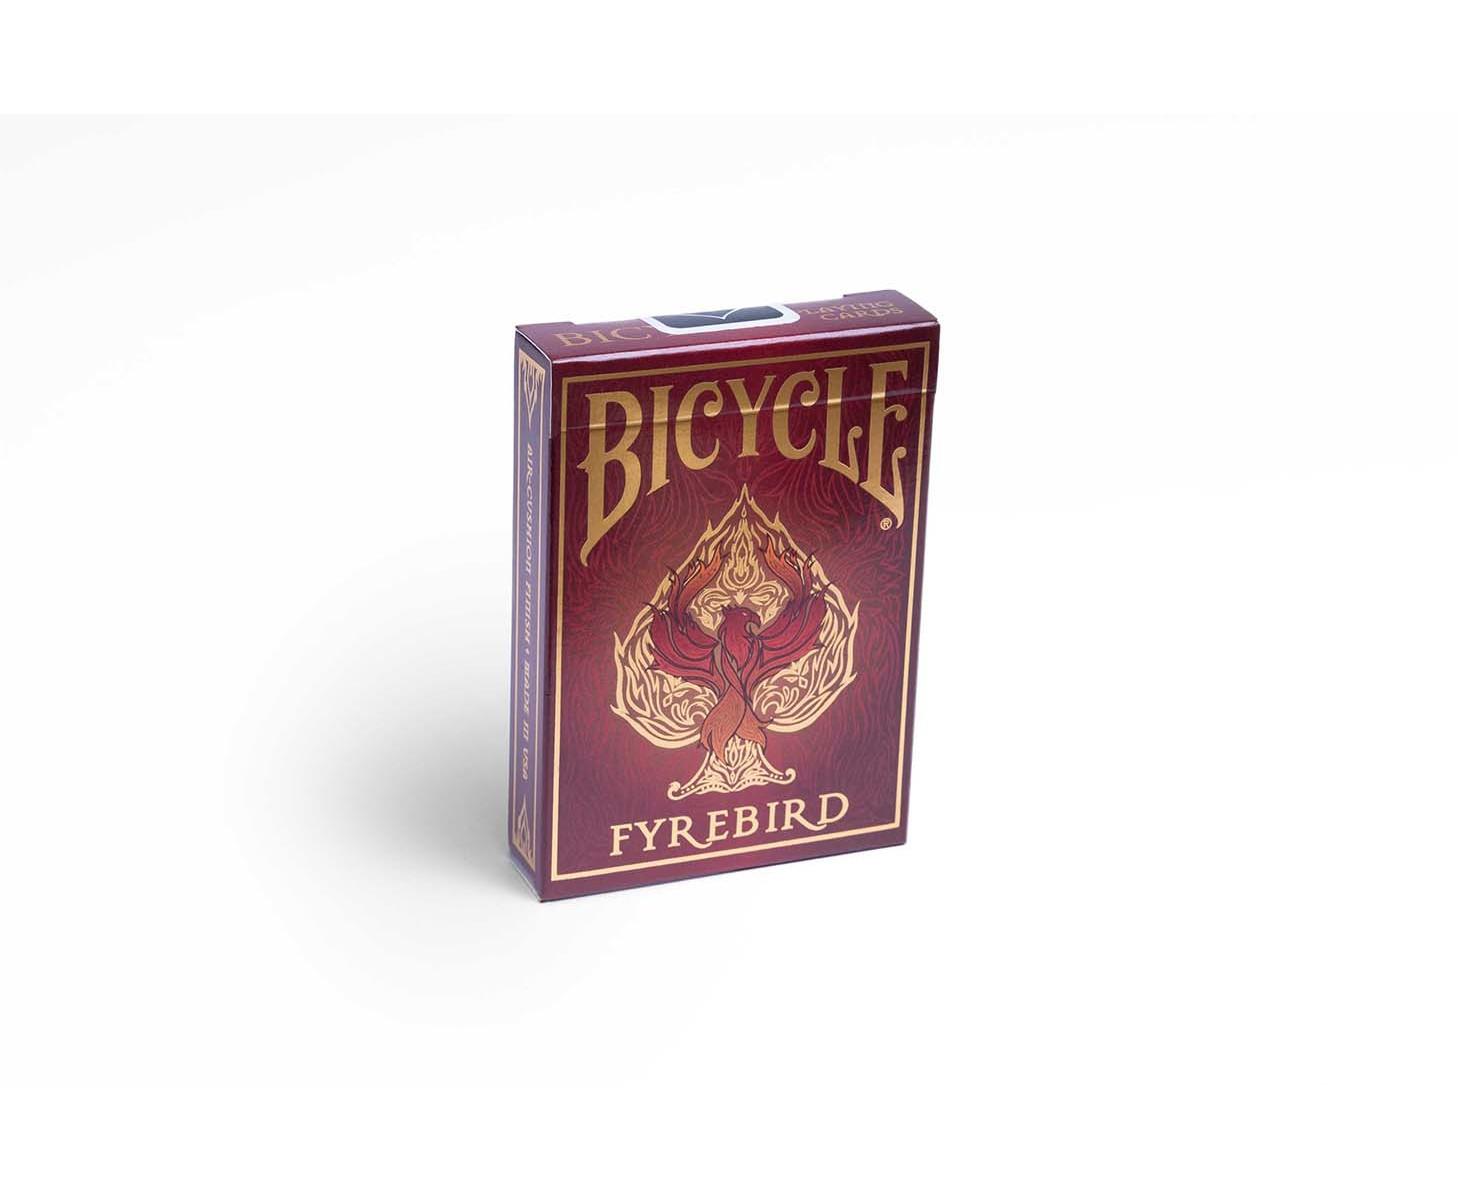 ASS - Fyrebird Bicycle Kartenspiel Kartendeck ALTENBURGER